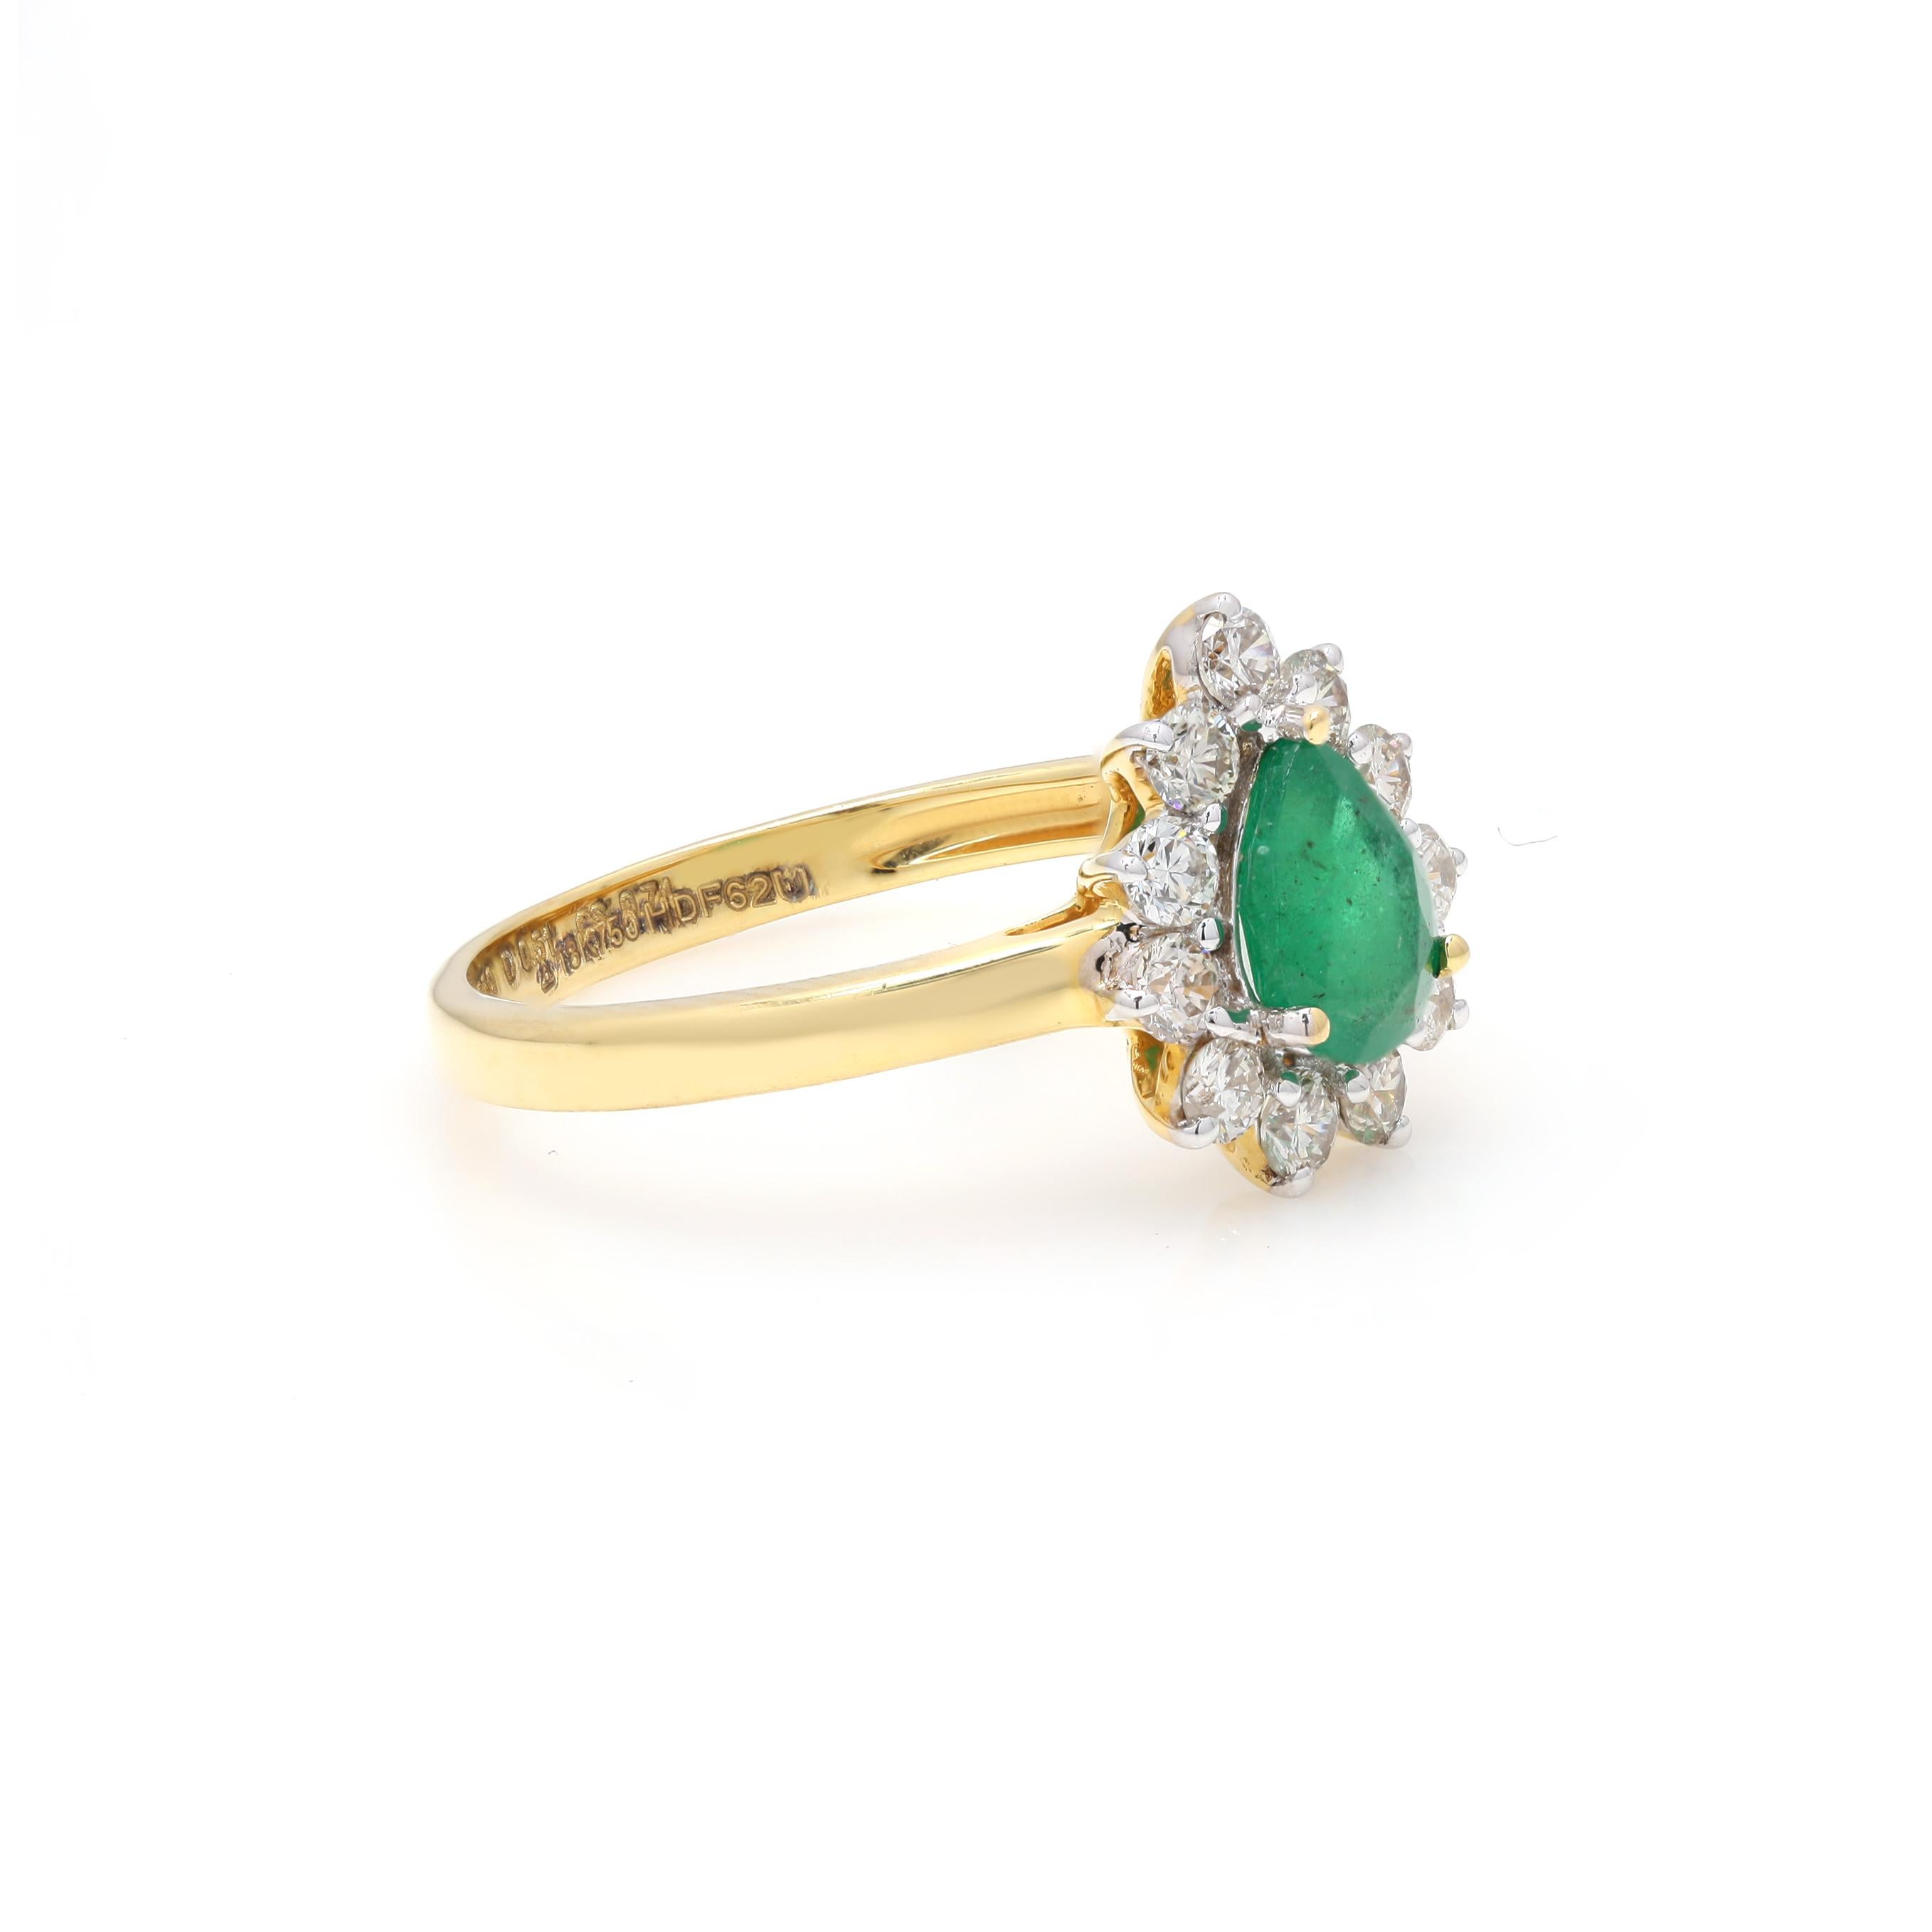 For Sale:  18k Yellow Gold Classic Halo Diamond Pear Cut Emerald Wedding Ring 3